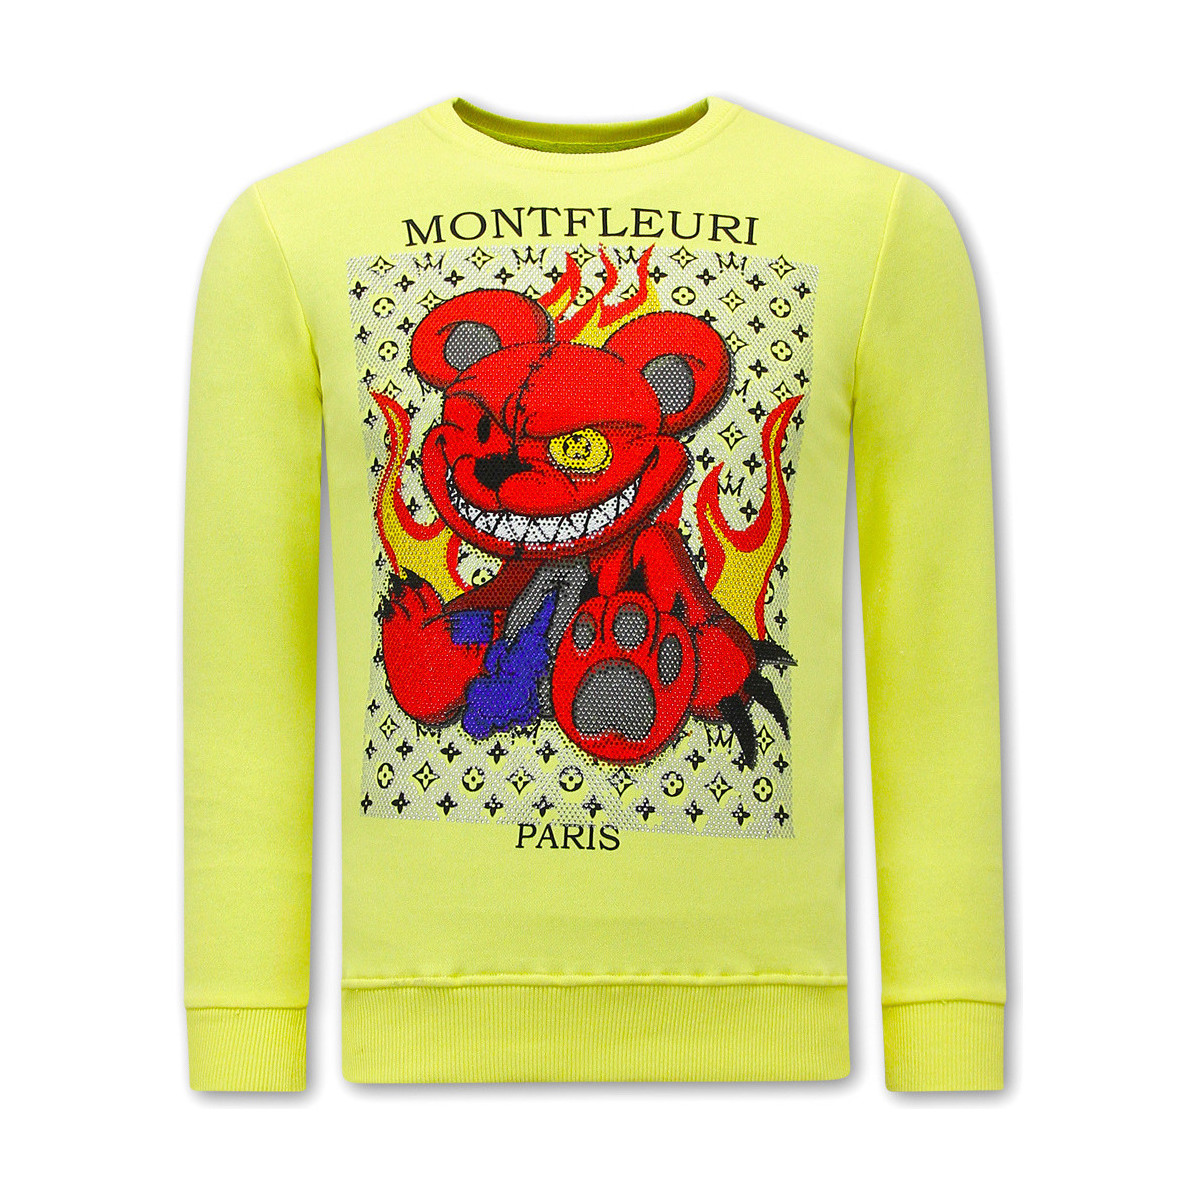 Textiel Heren Sweaters / Sweatshirts Tony Backer Print Monster Teddy Bear Geel